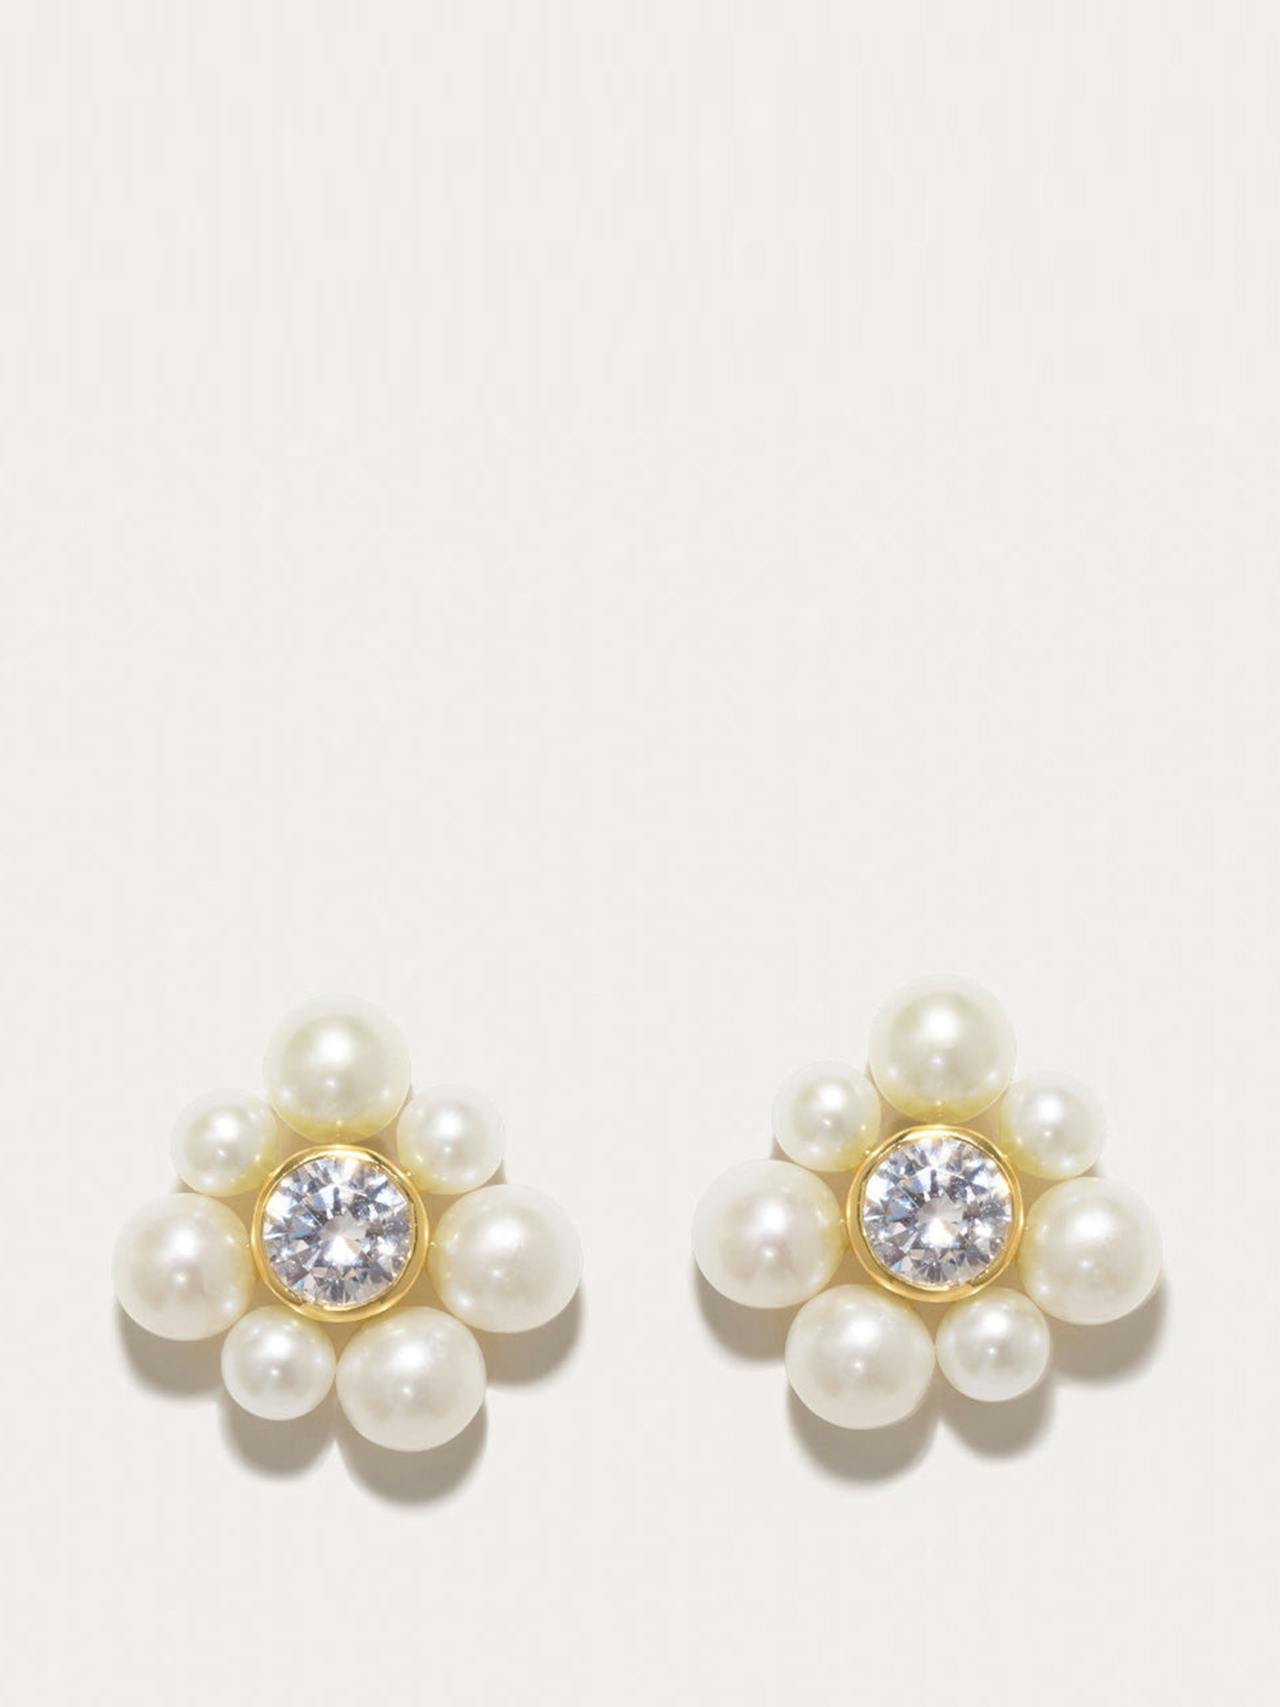 P175 pearl and zirconia gold vermeil earrings